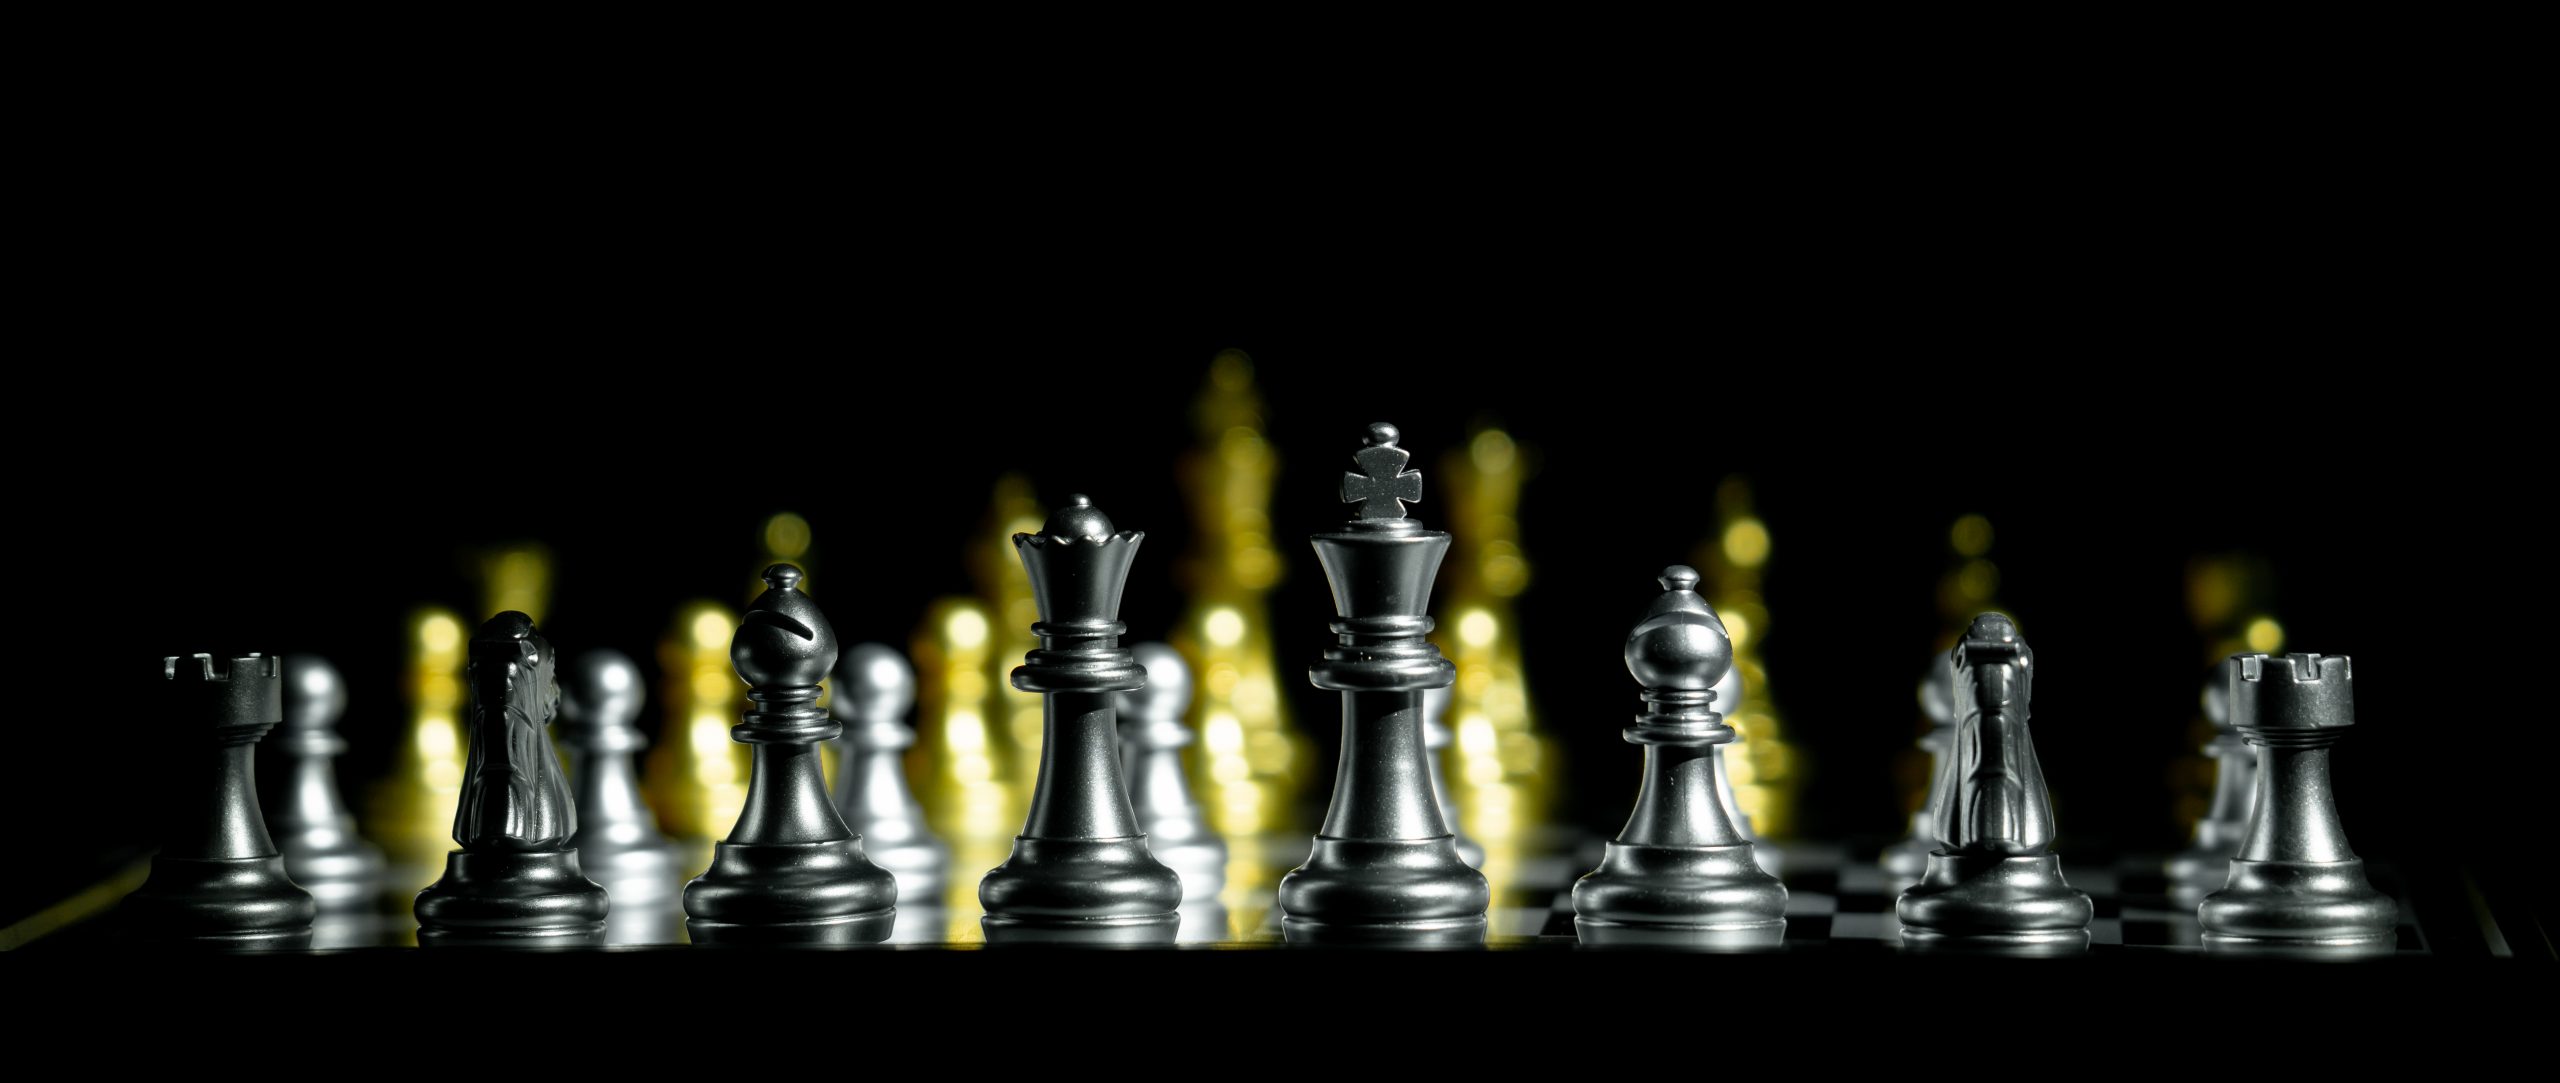 Chess board - Strategy